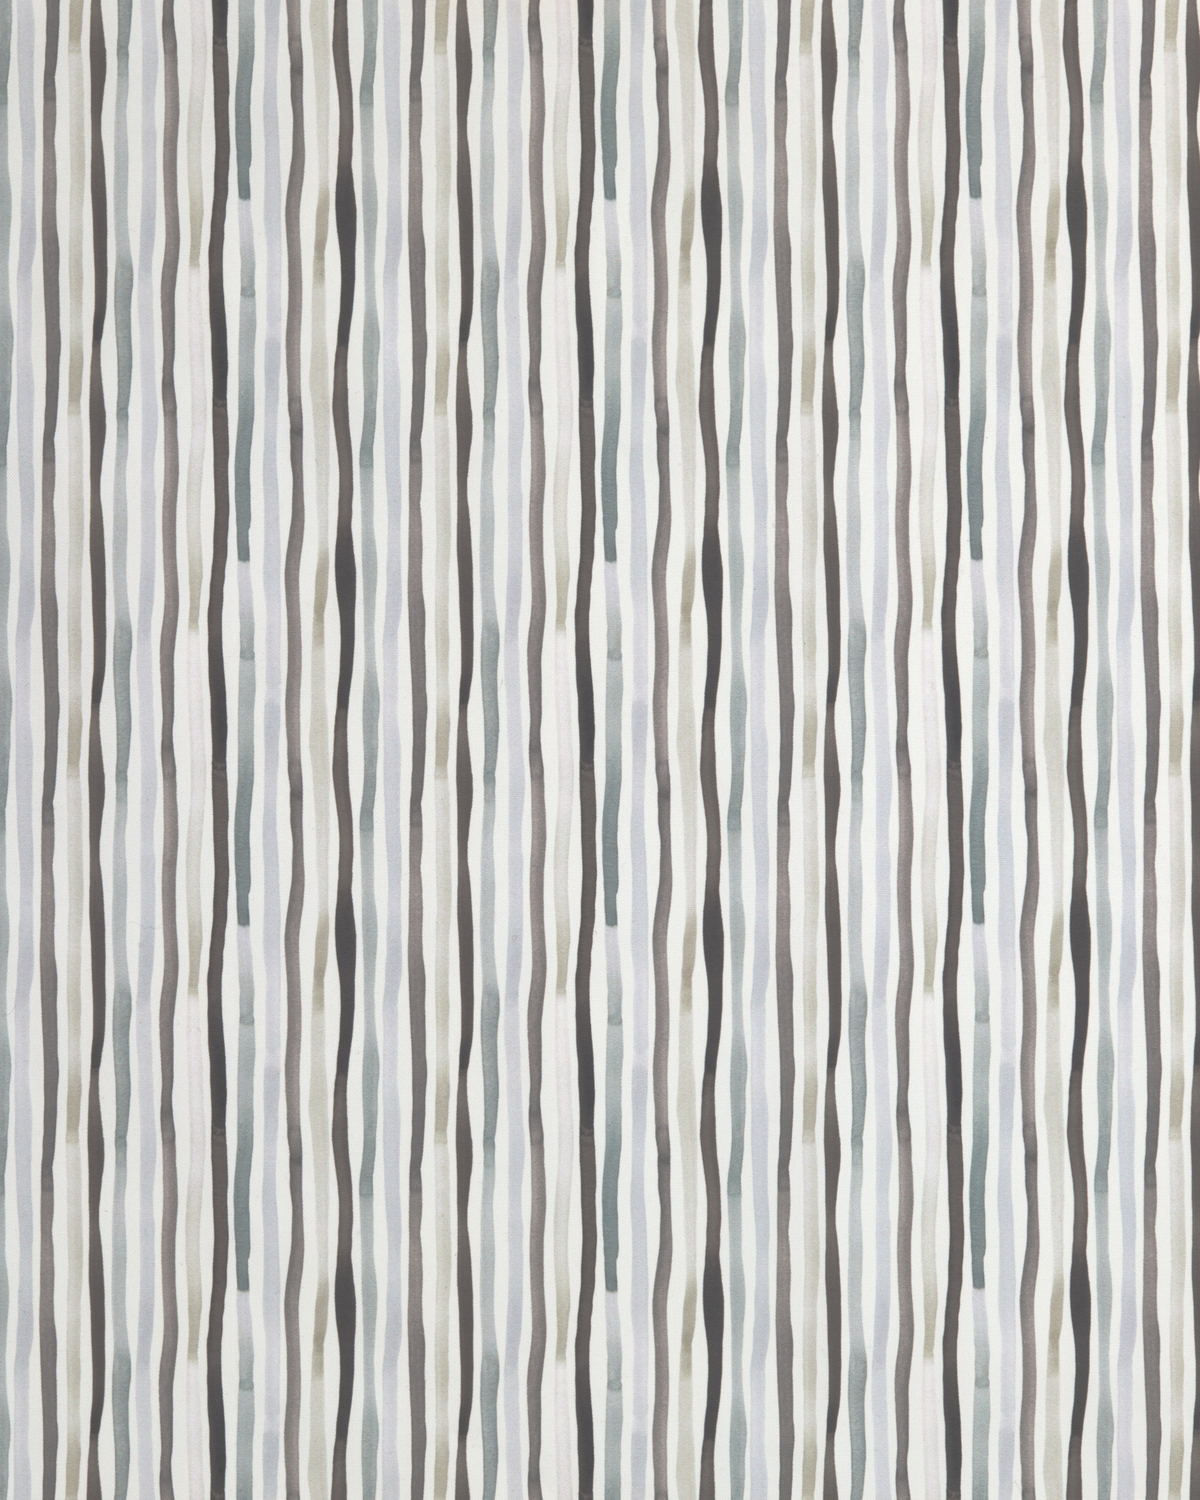 Garden Stripe Fabric in Inkwash